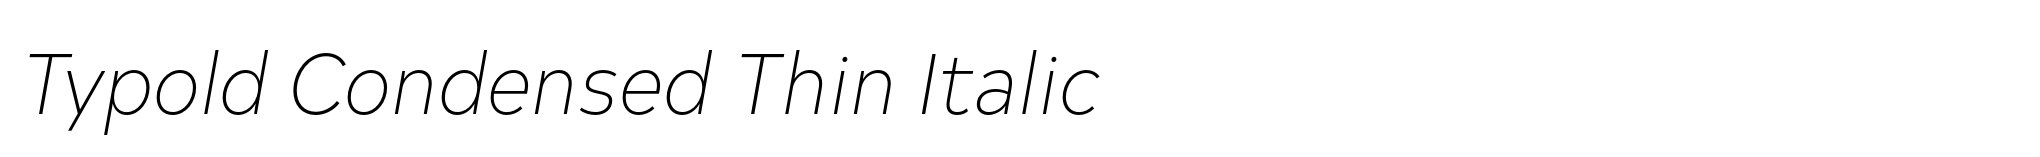 Typold Condensed Thin Italic image